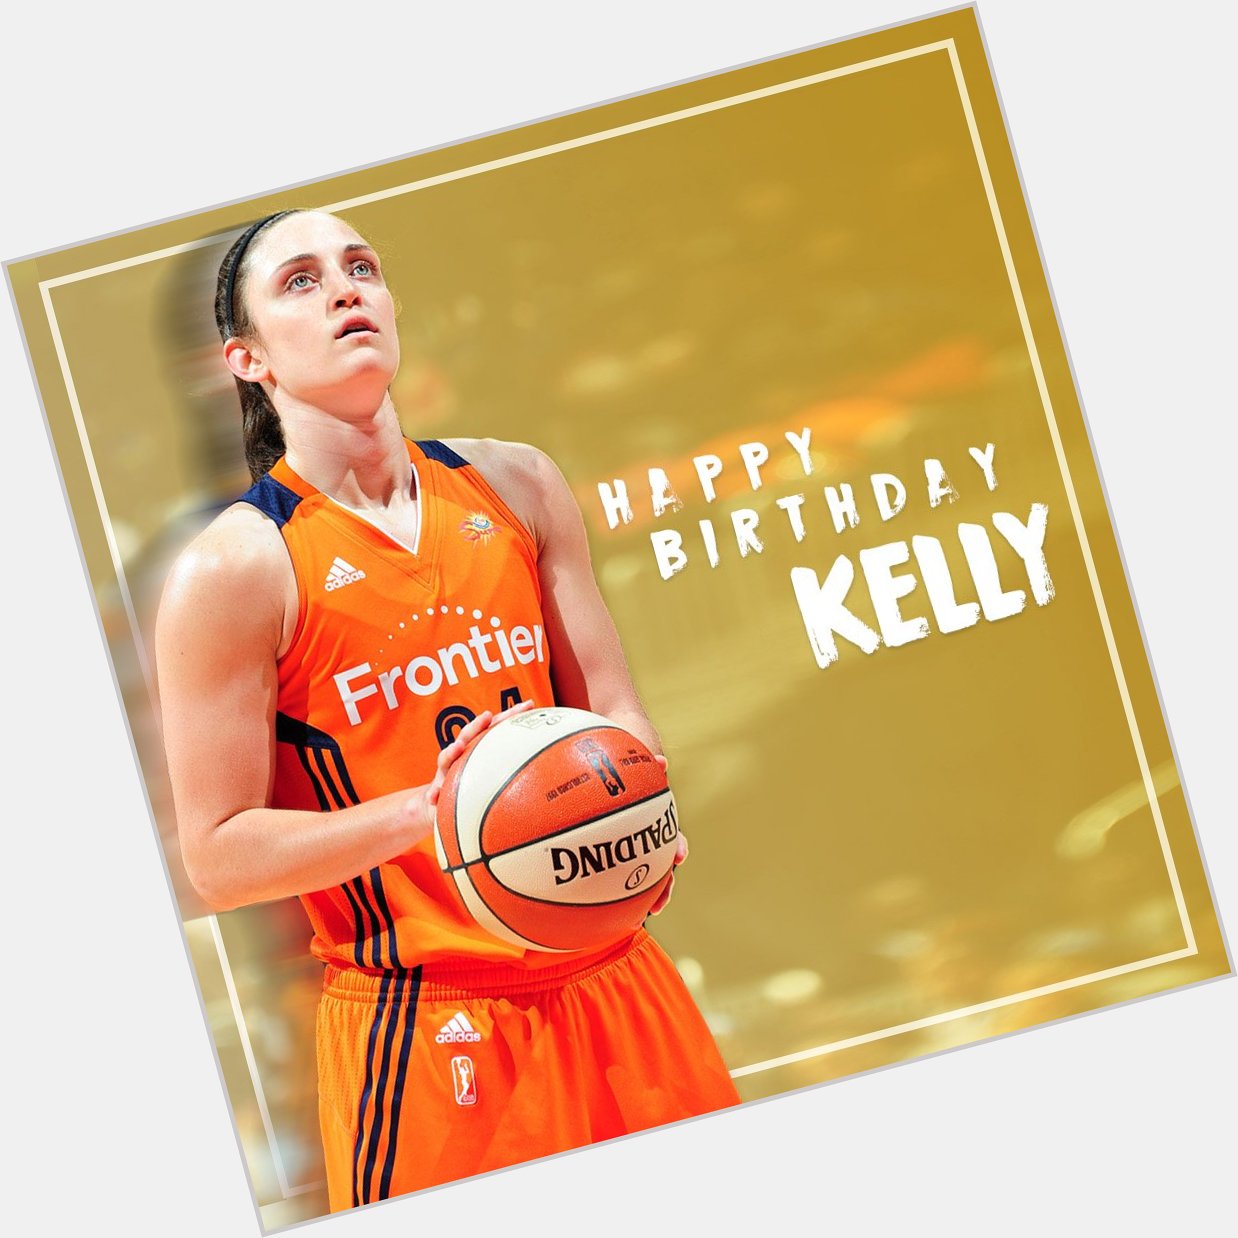 Hey Sun fans, help us wish a HAPPY BIRTHDAY to Kelly Faris! 